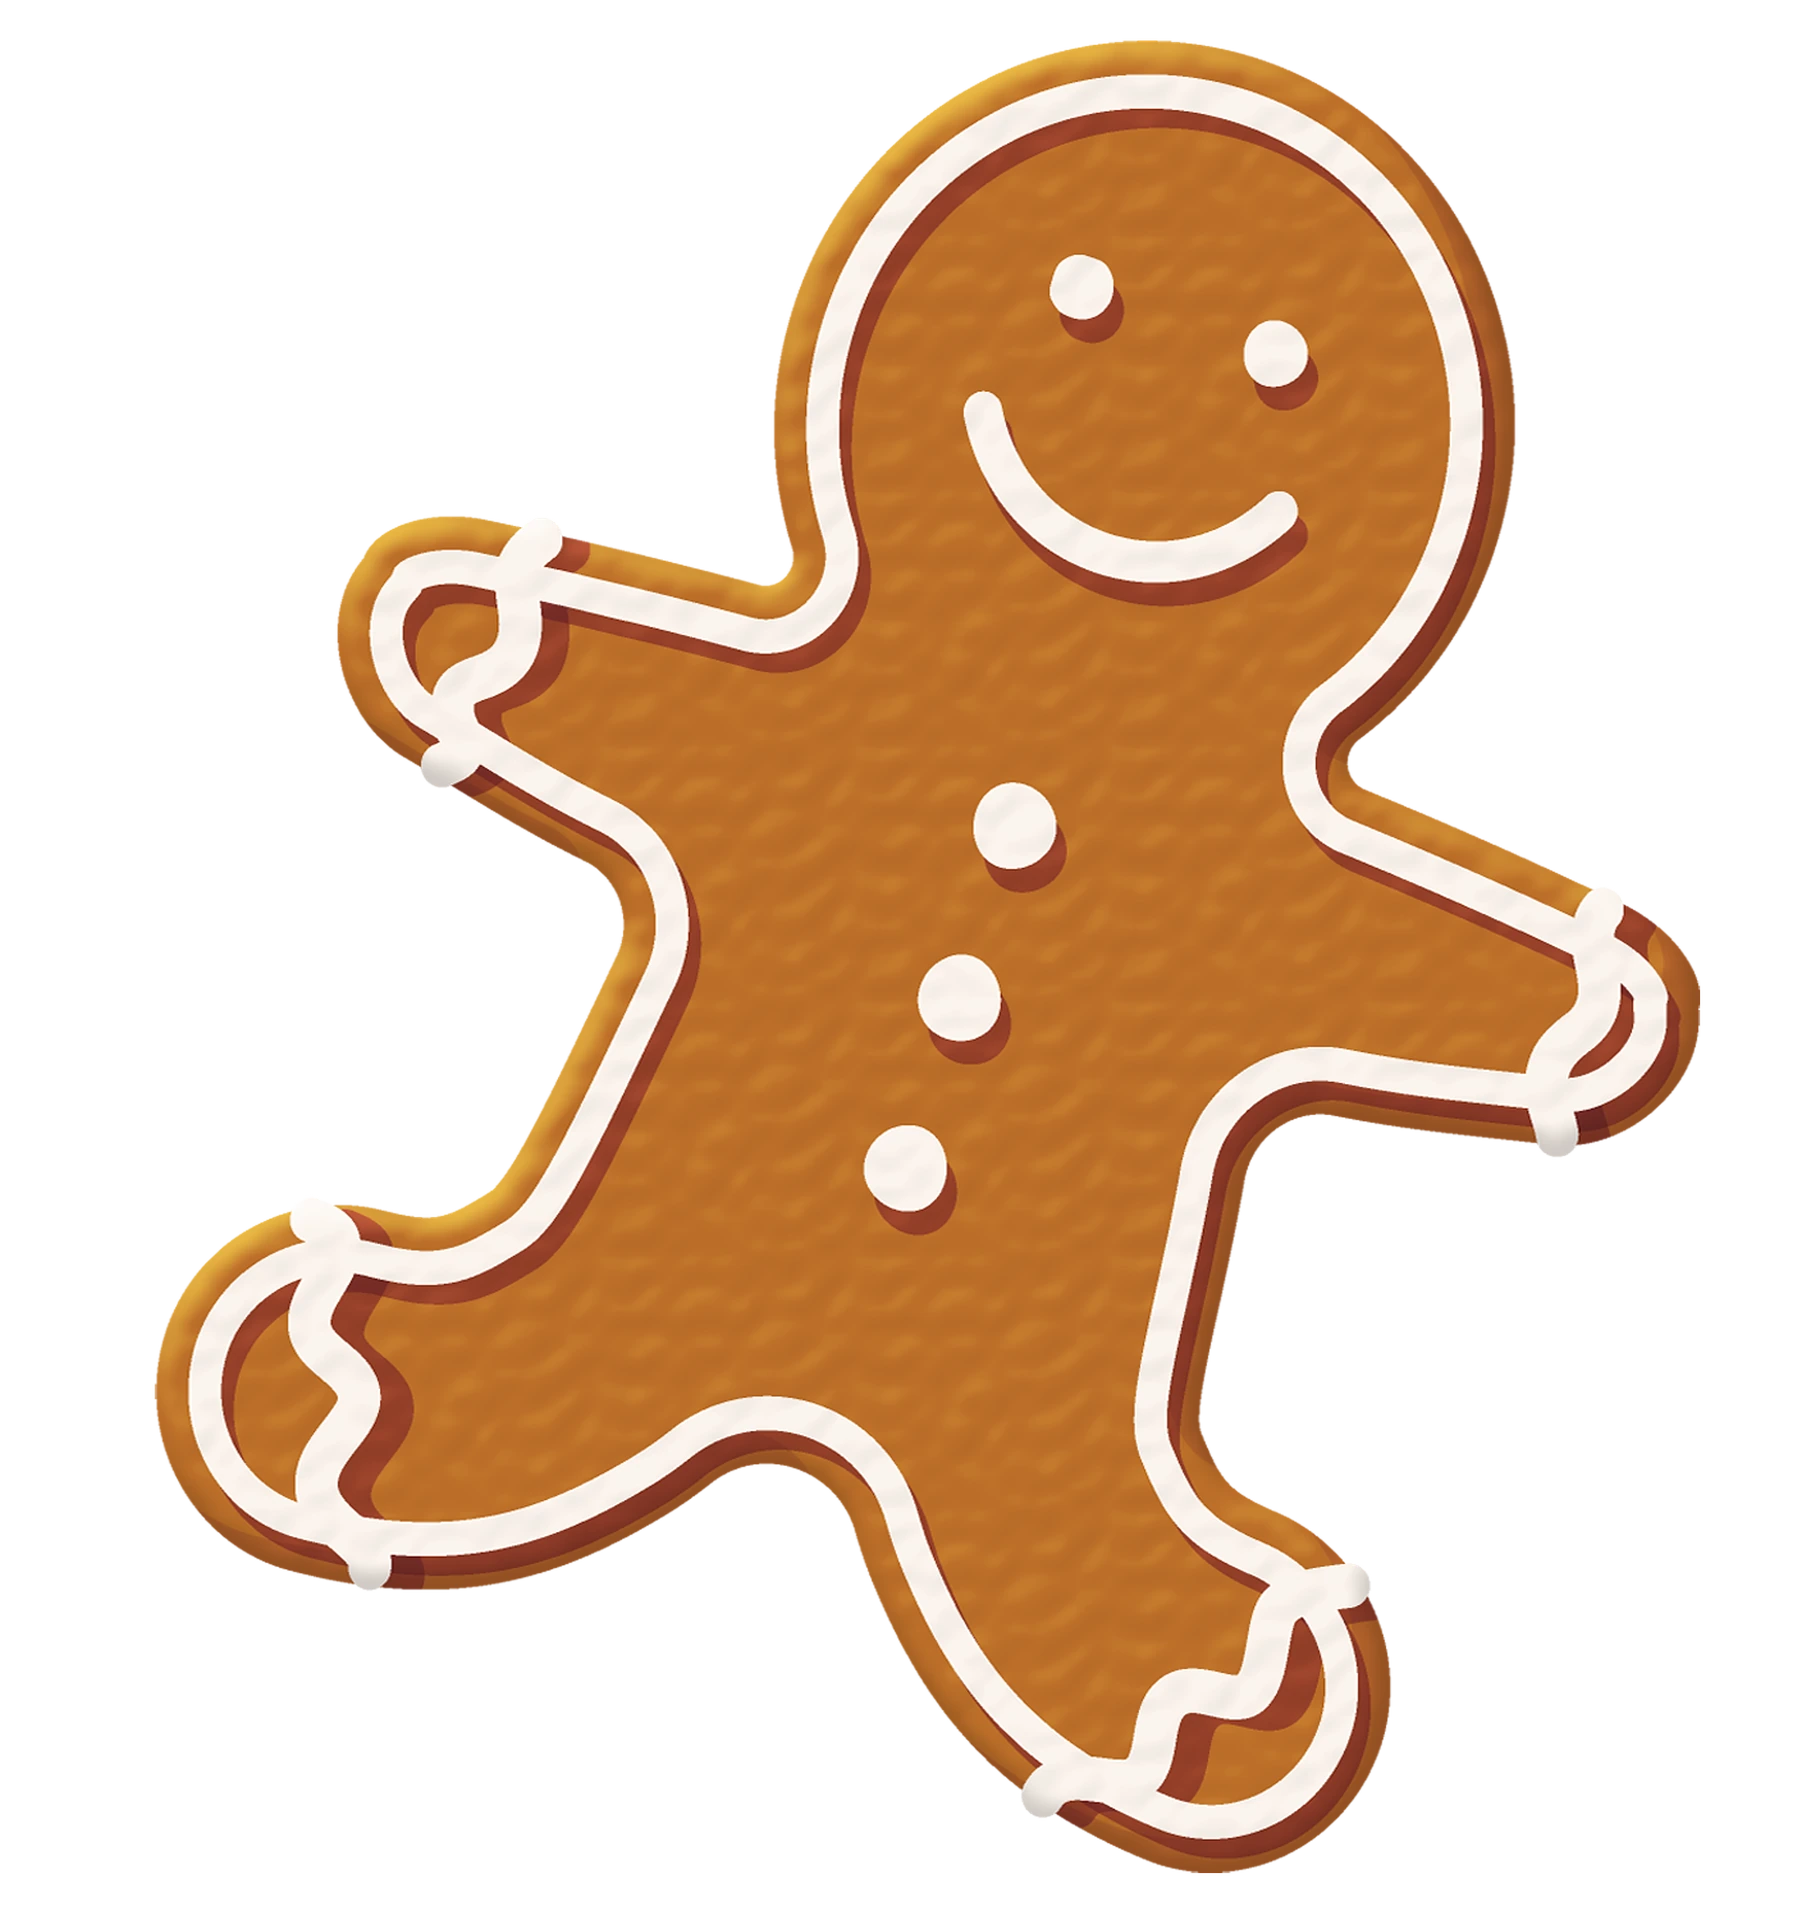 Healthy Holiday Treats - A Ginger Bread Man